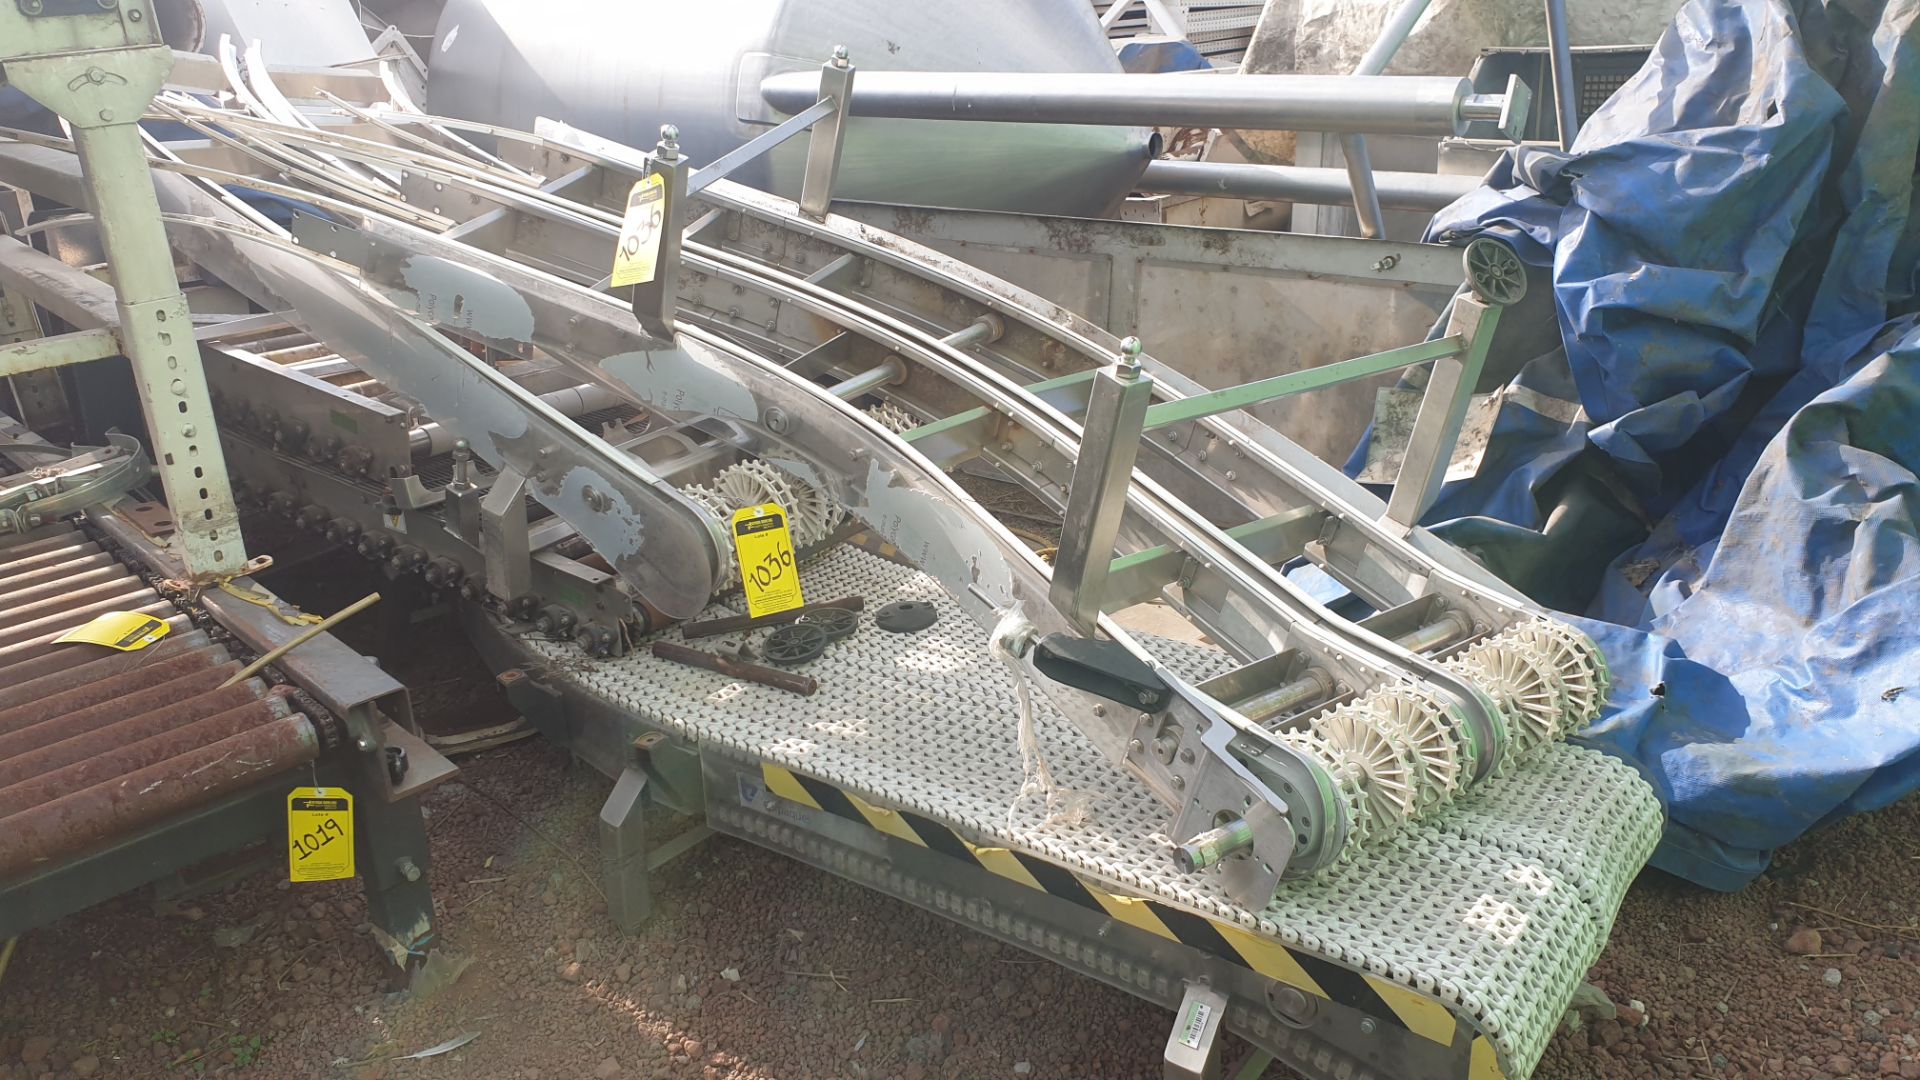 S conveyor belt batch. Please inspect - Image 2 of 9